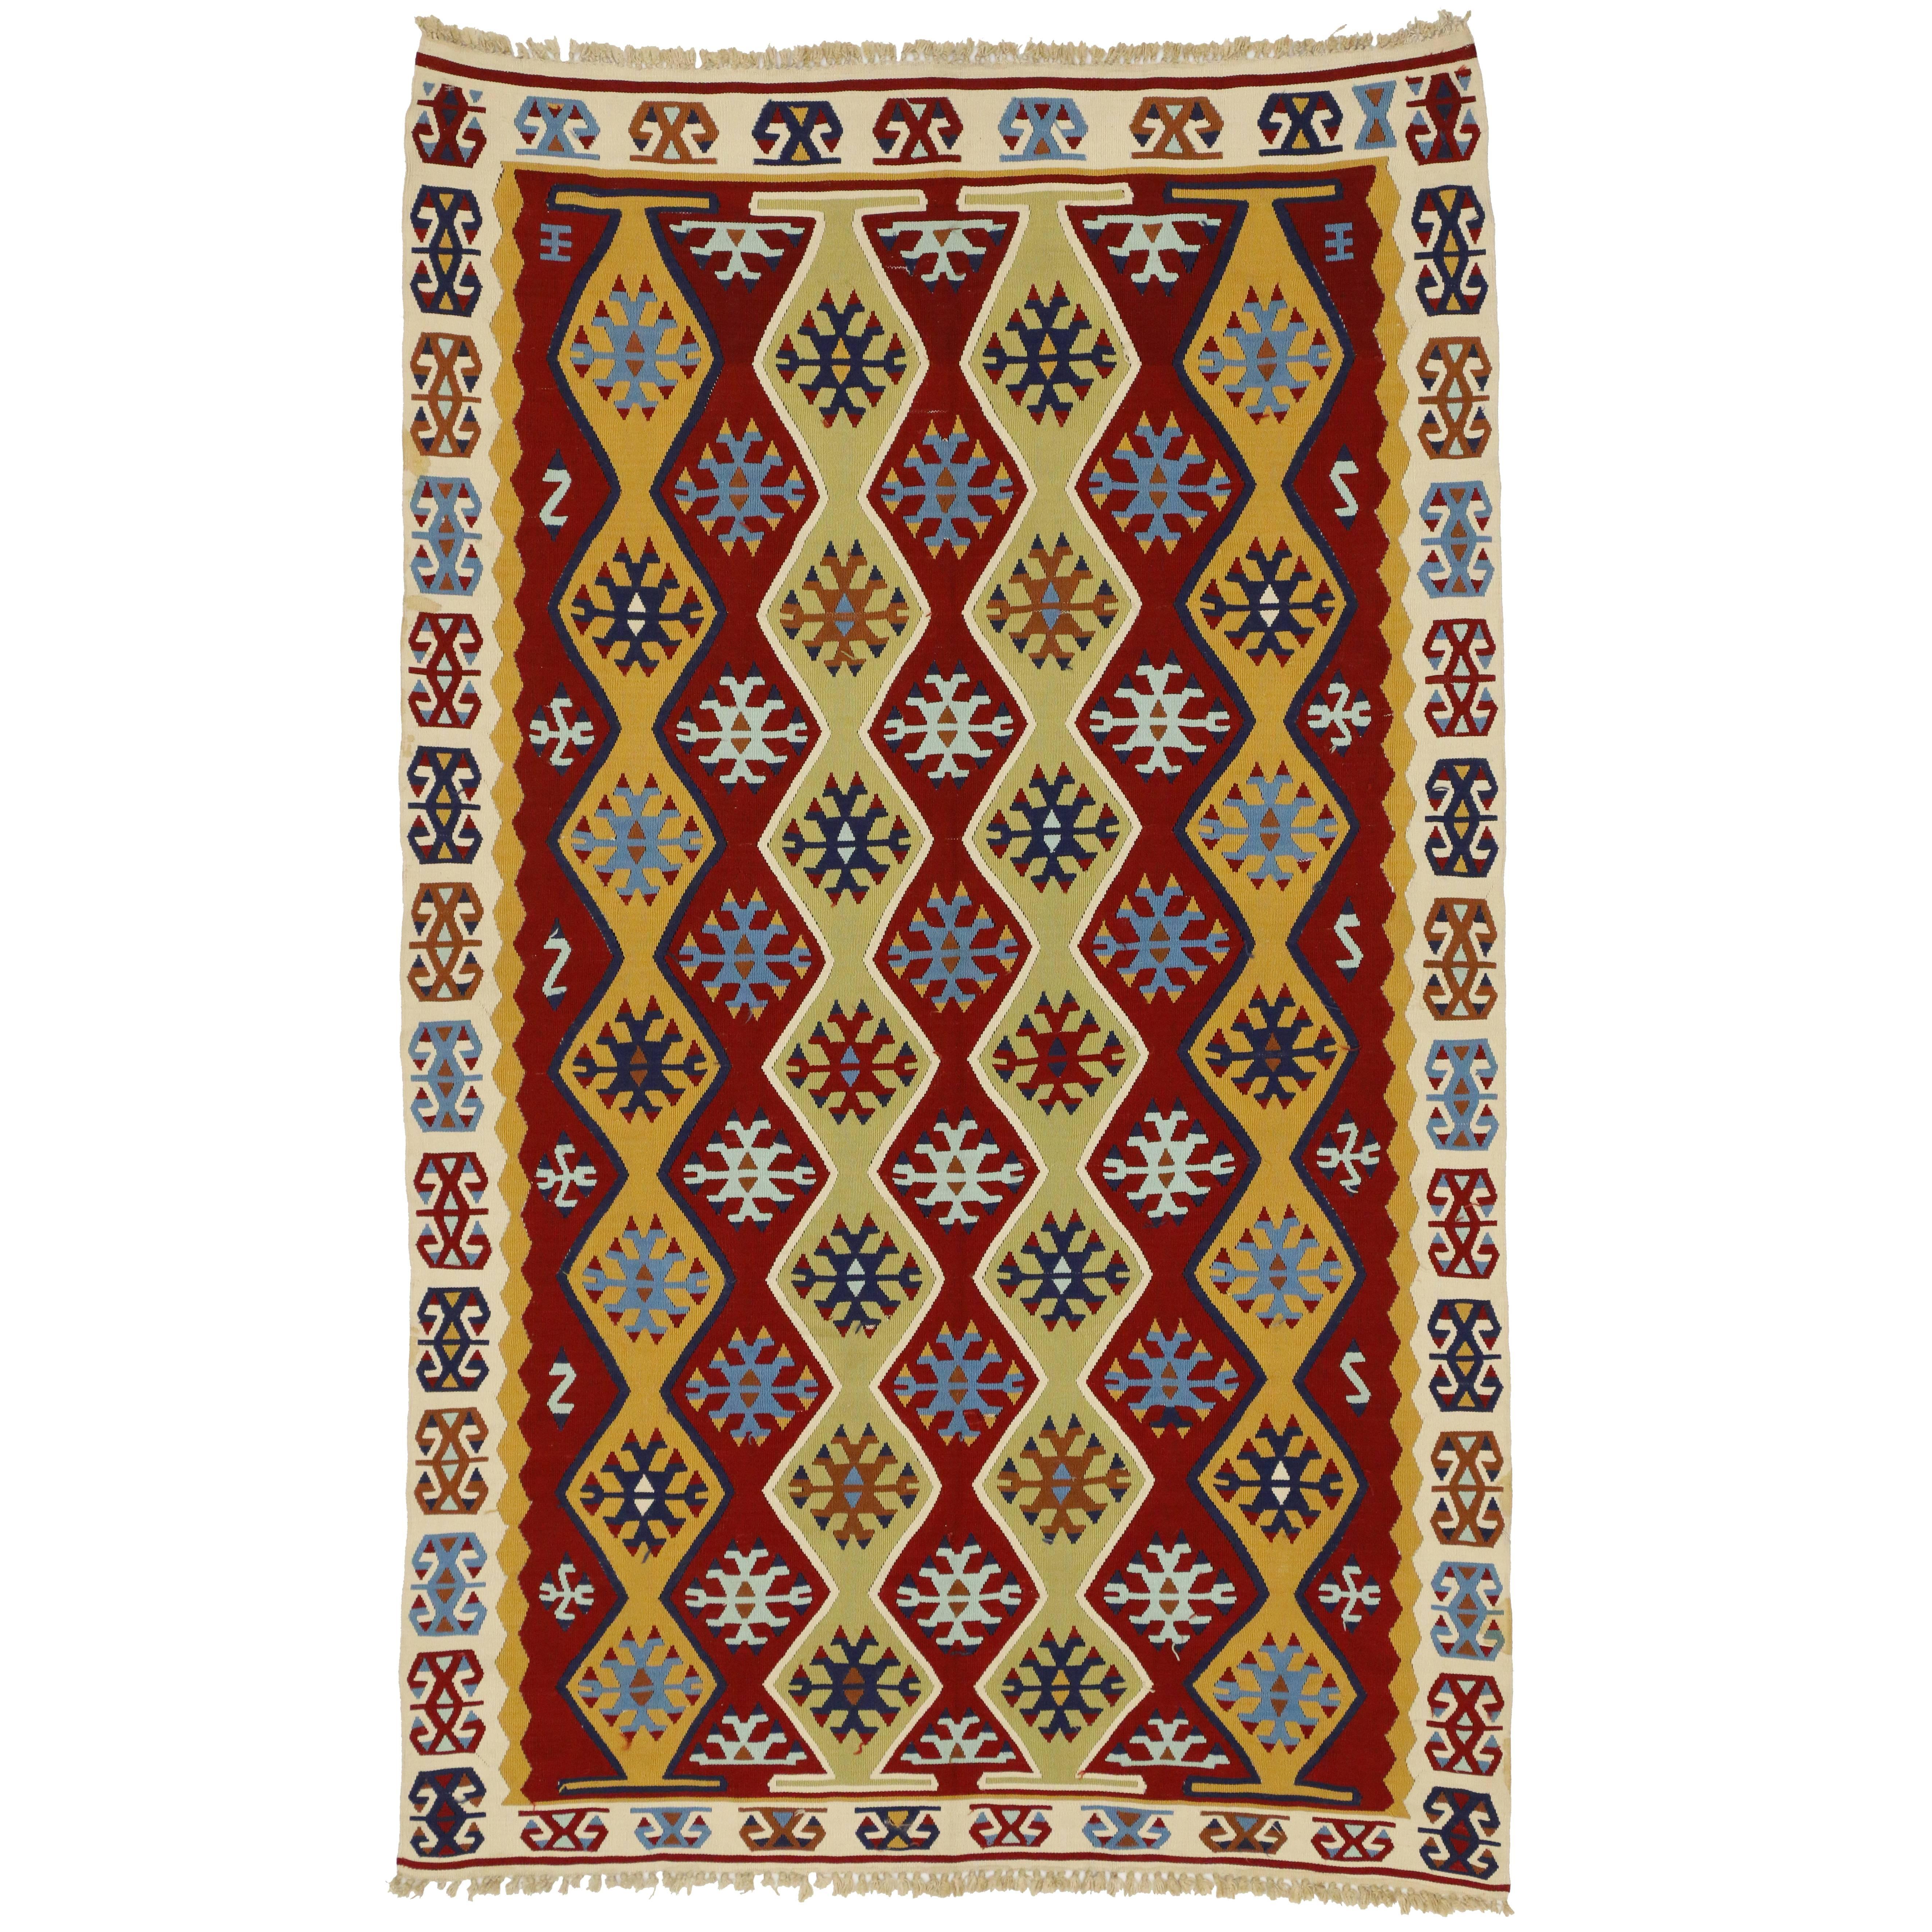 Vintage Turkish Silk Kilim Rug with Modern Tribal Style